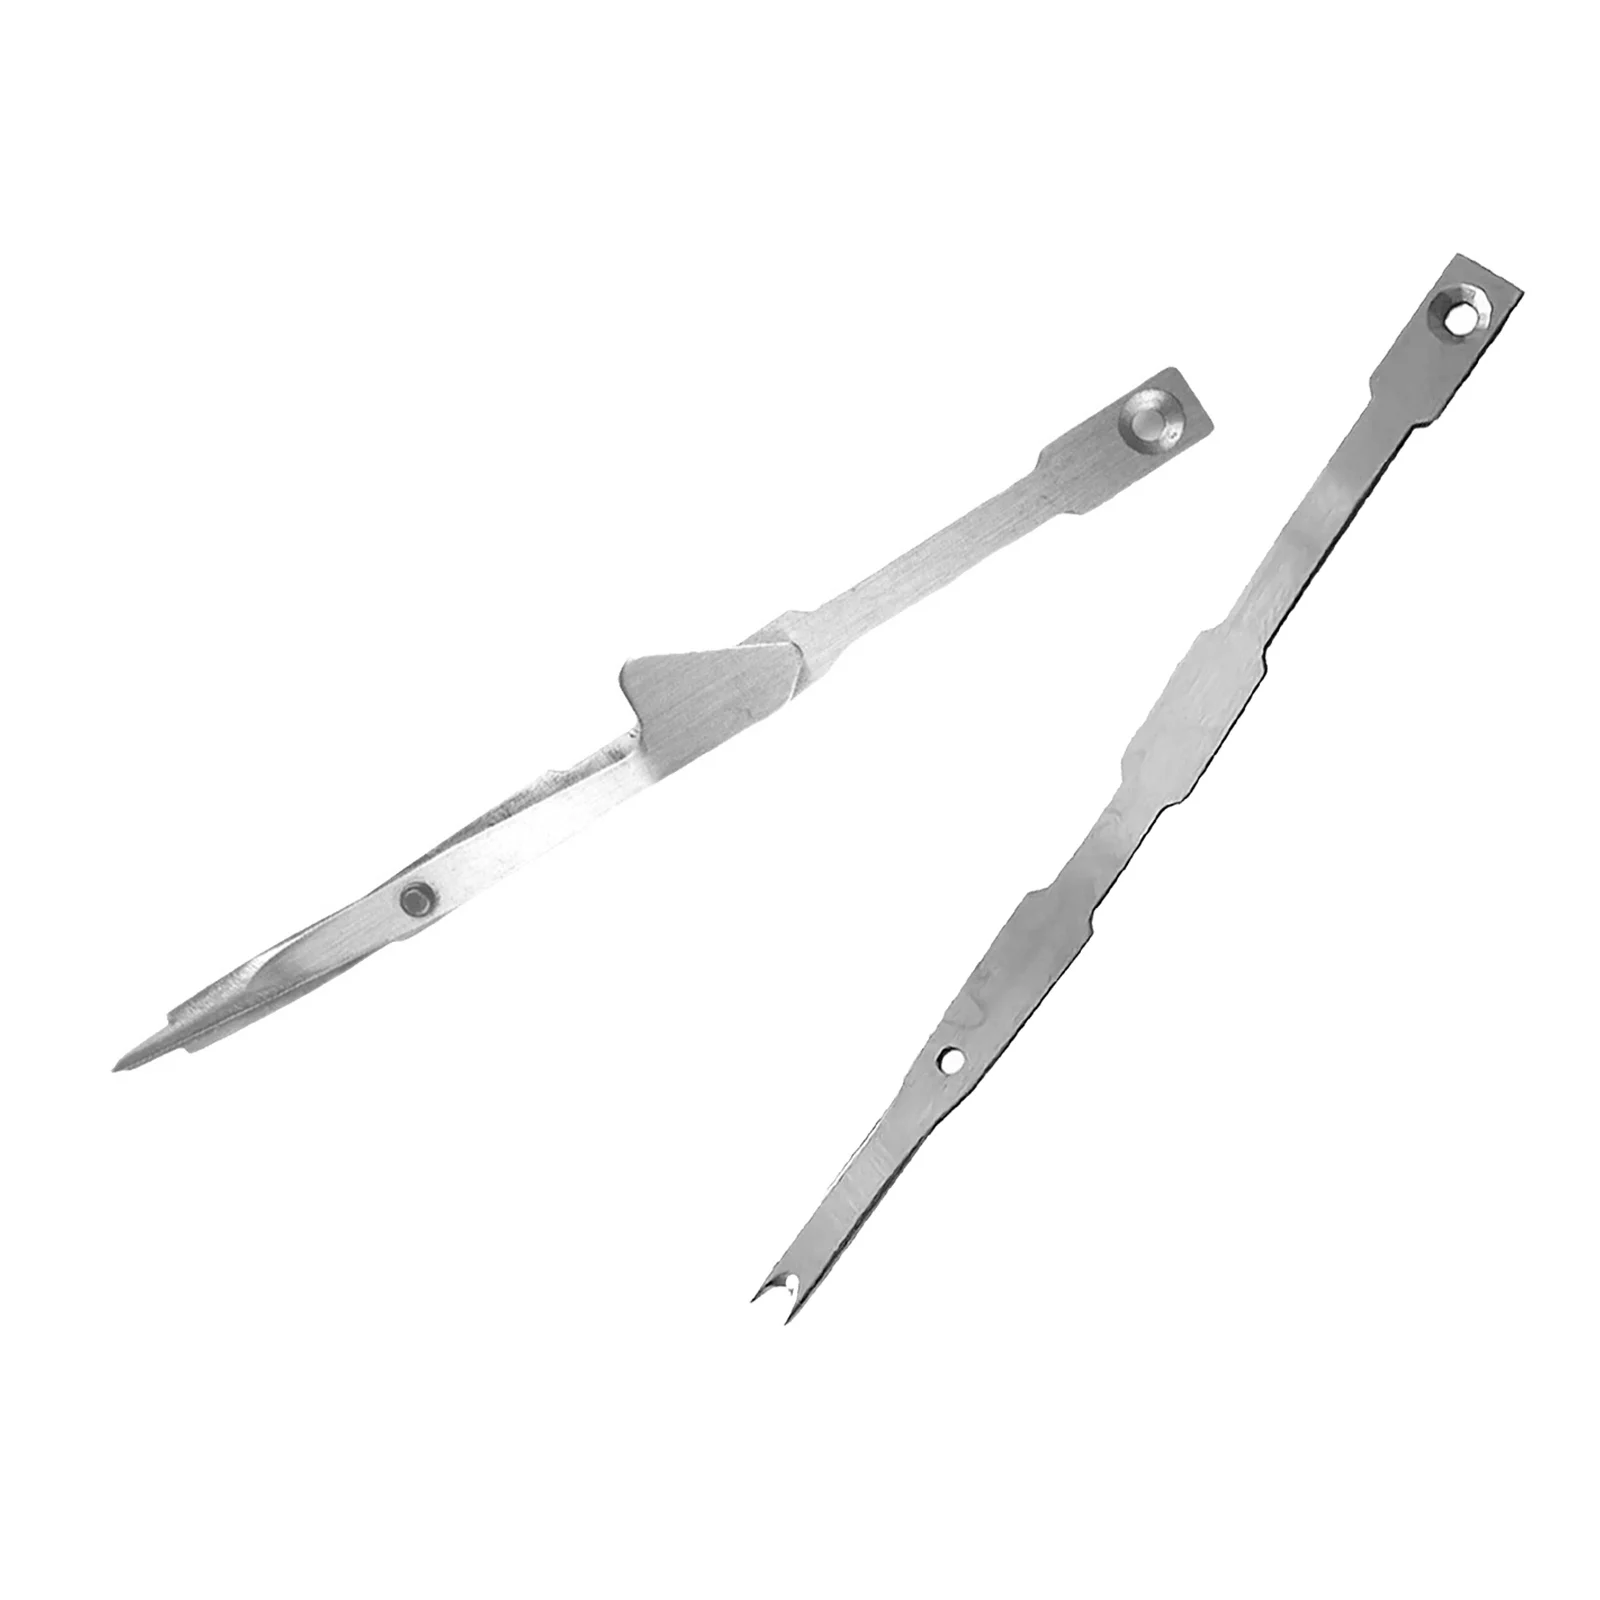 Loop Pile Scissor Cut Pile Scissor for Electric Hand Tufting Gun Rug Machines Power Tool Parts Replacement Spare Accessories